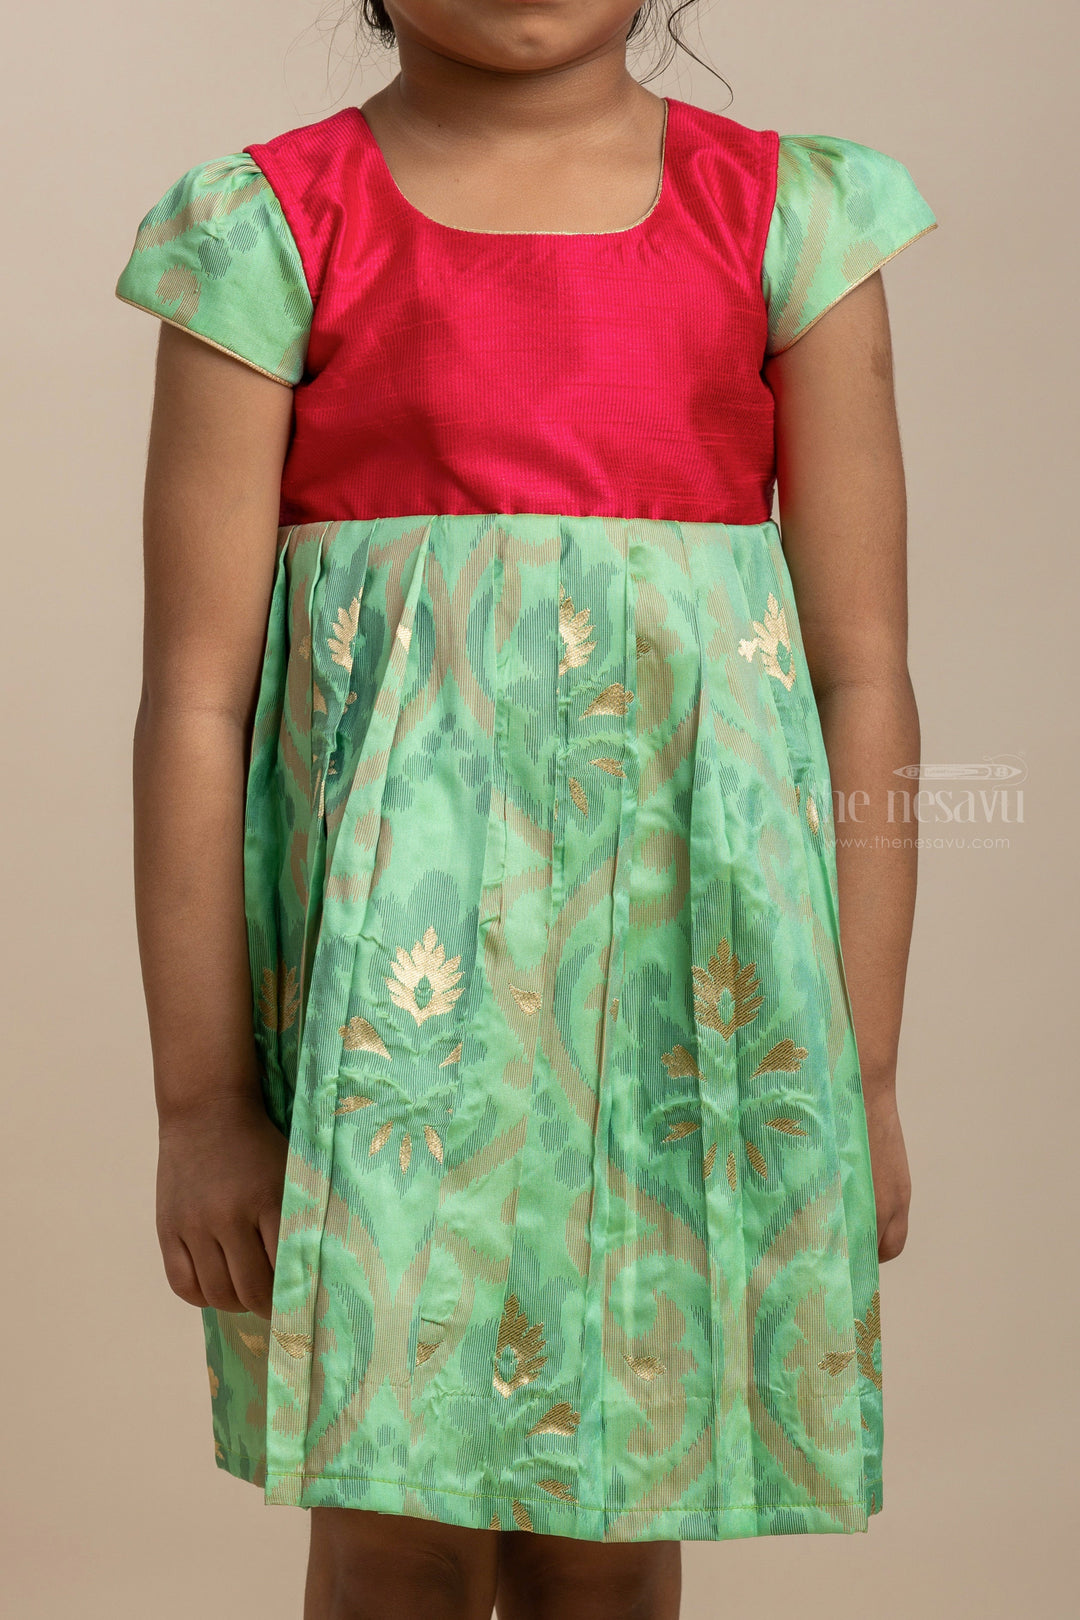 The Nesavu Silk Frock Mint Green With Pink Elegant Silk Cotton Langa Dress For Girls Nesavu Designer Langa Voni Online | Stylish Silk Frock Ideas | The Nesavu